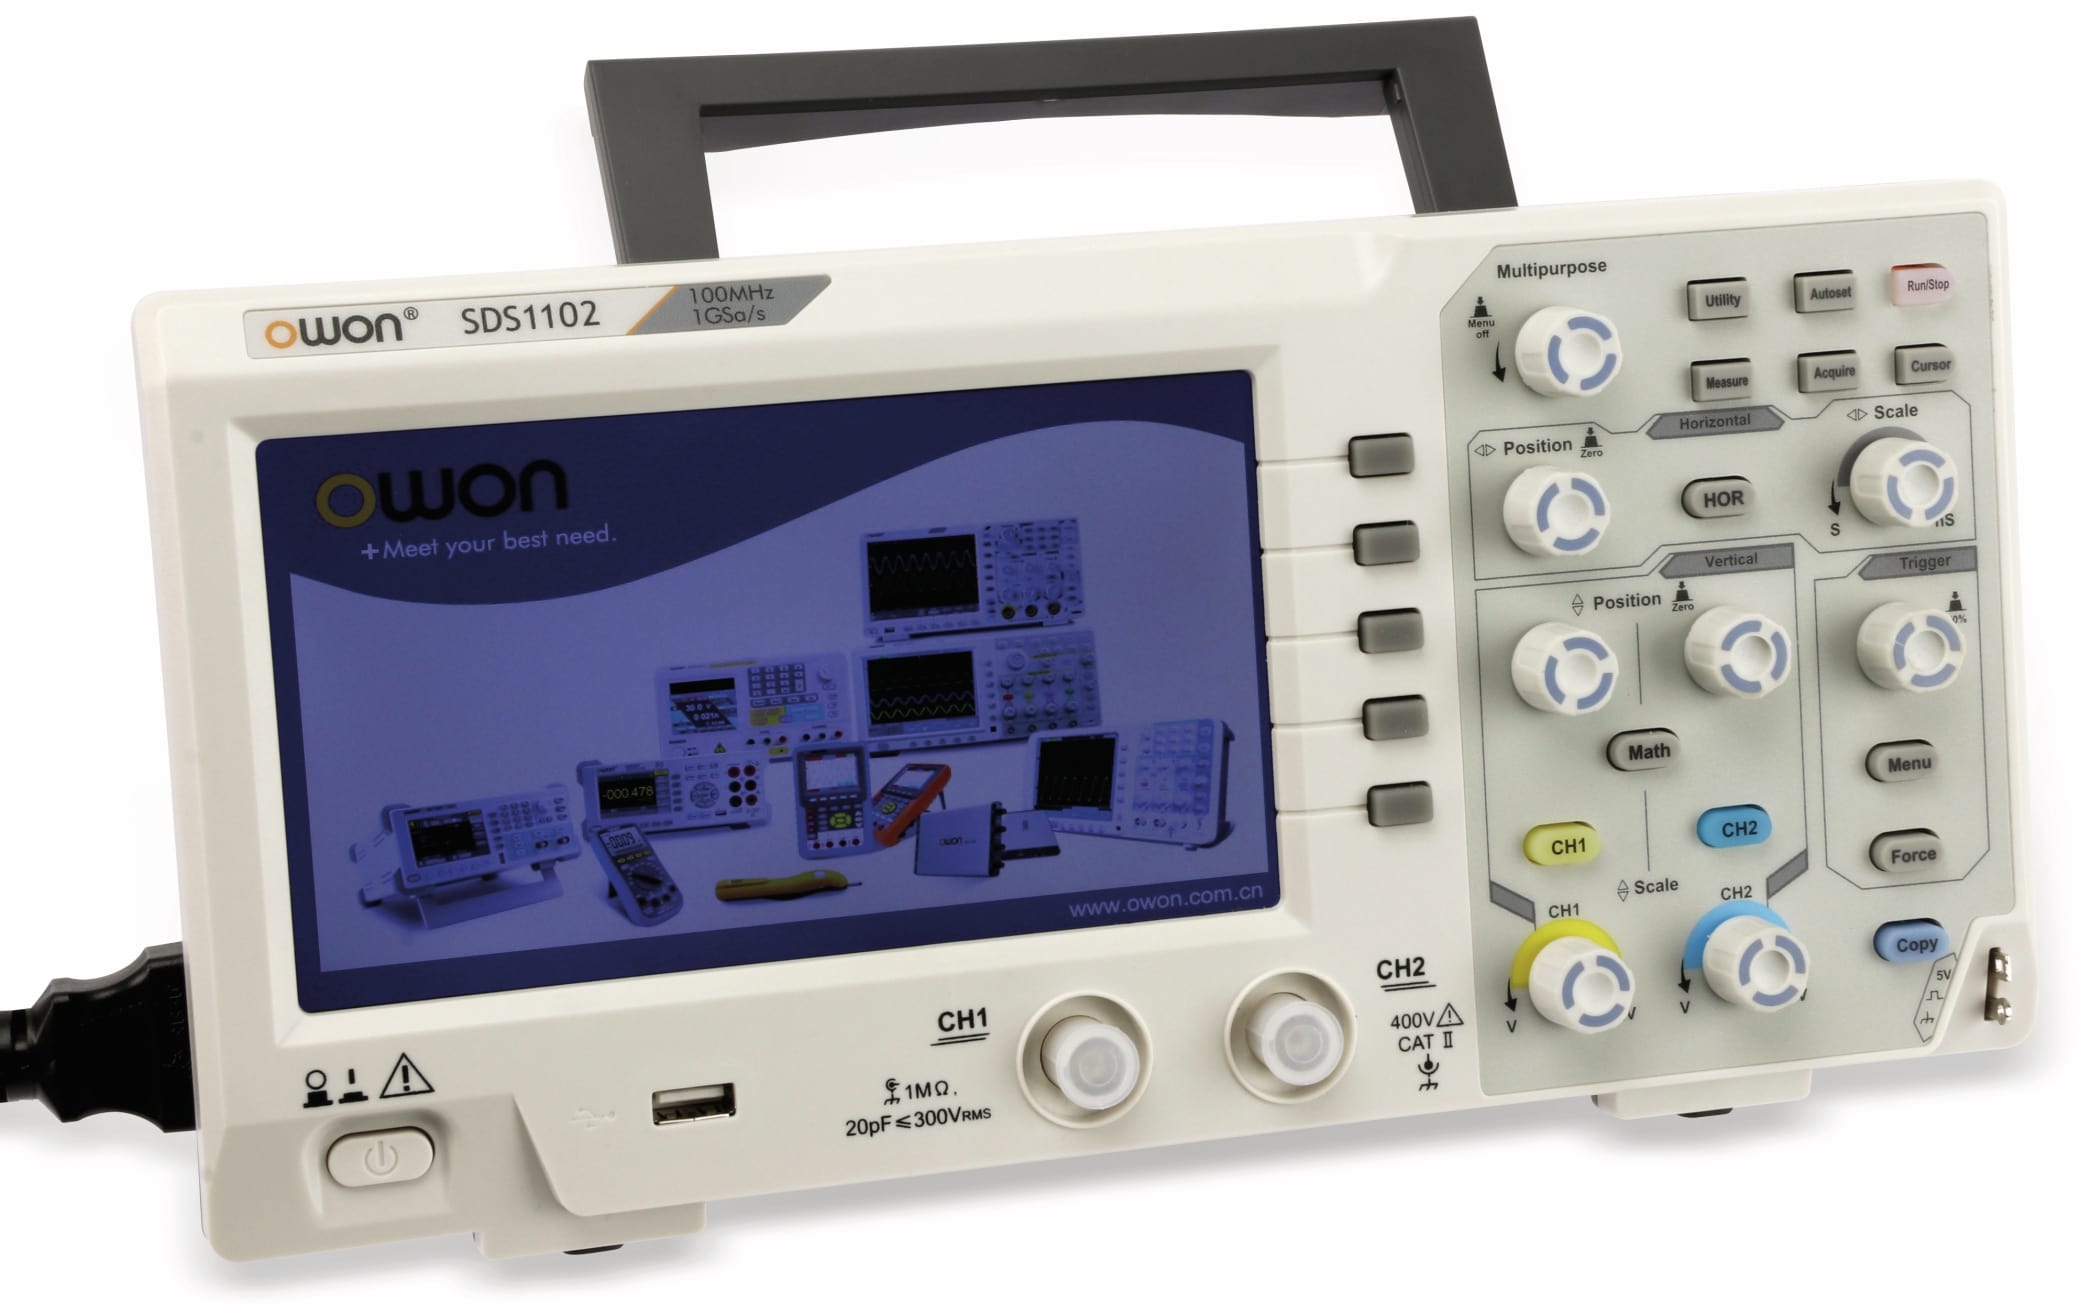 OWON LCD Speicher-Oszilloskop SDS1102, 2-Kanal, 100 MHz, USB